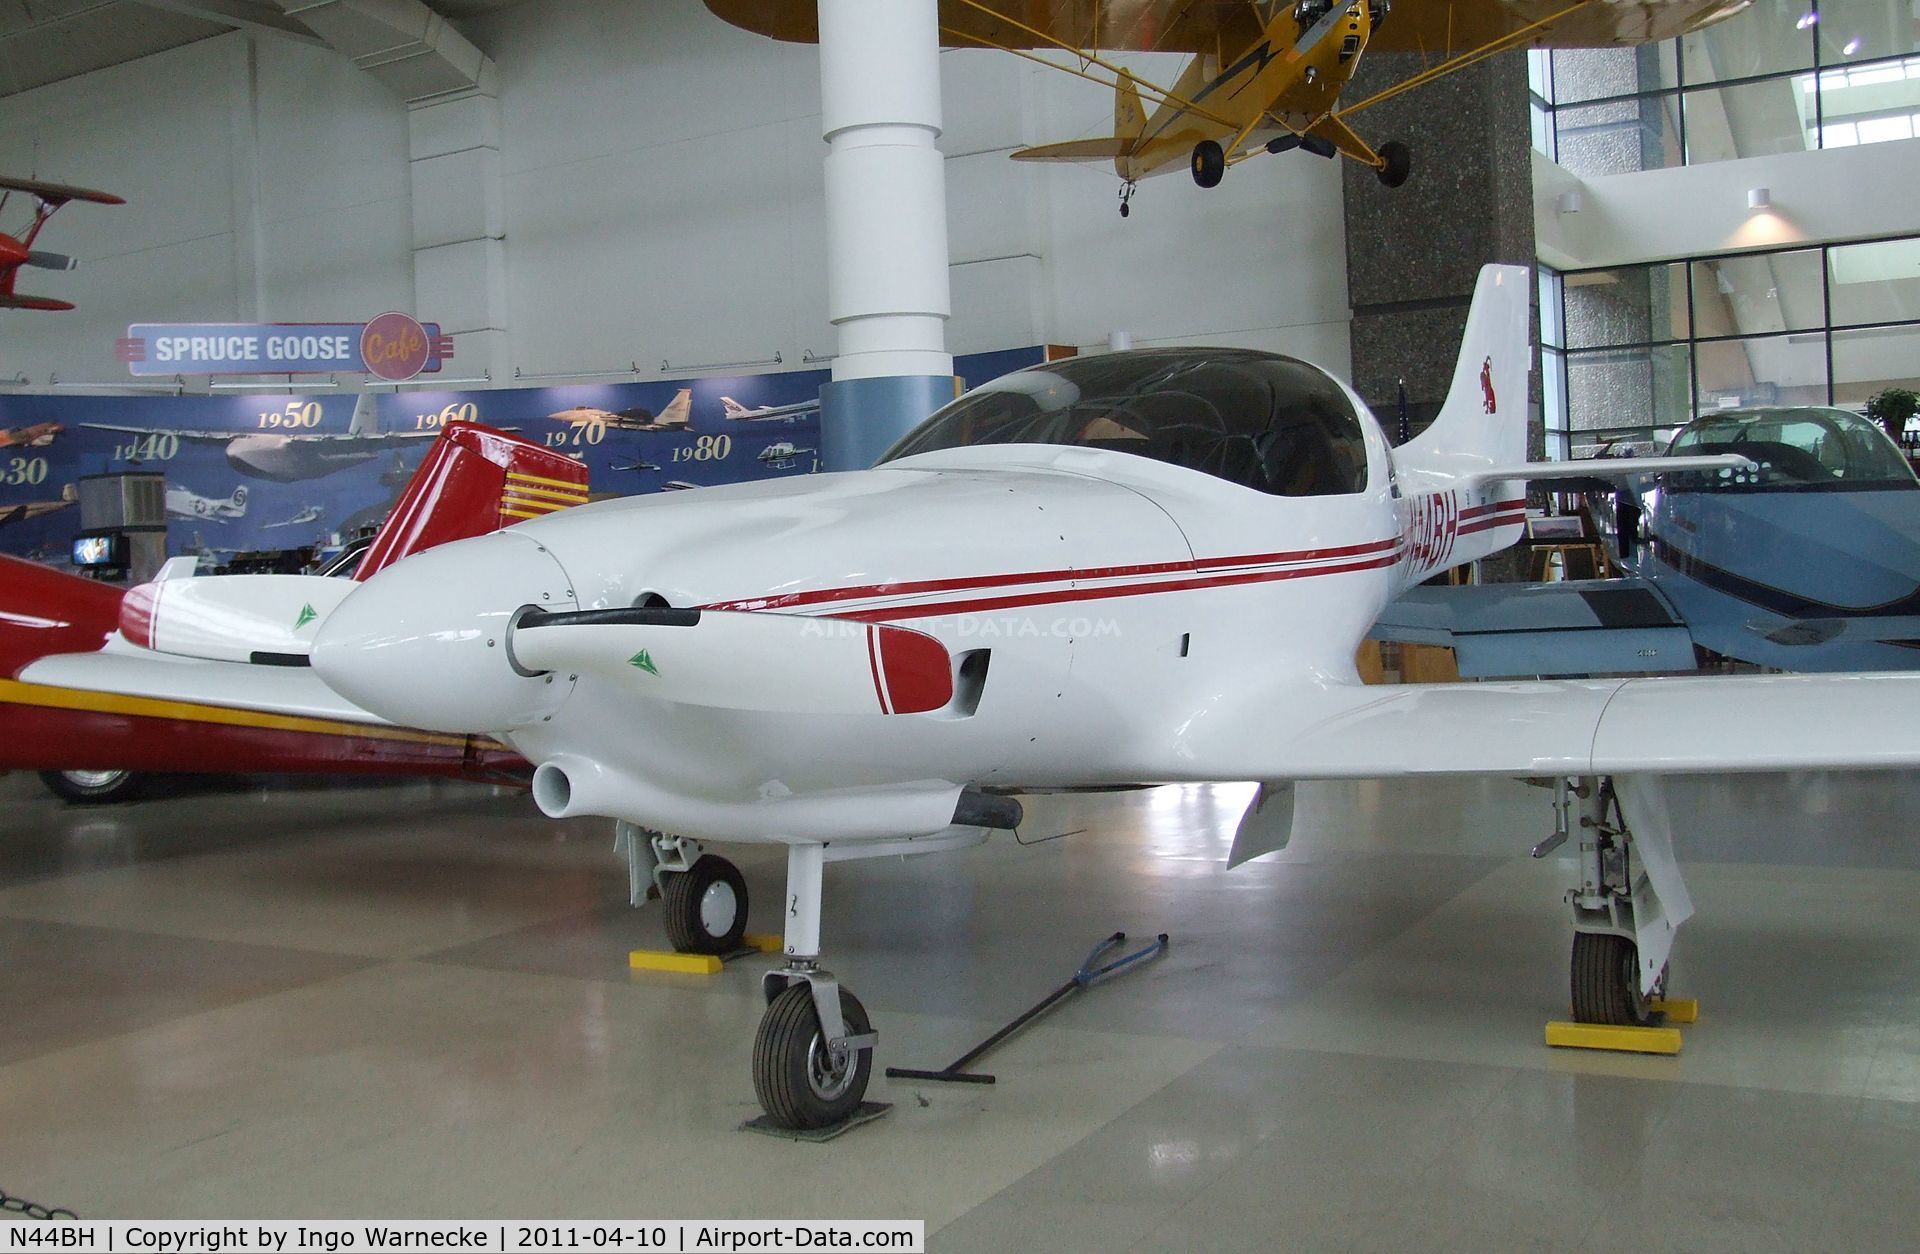 N44BH, 1995 Lancair 320 C/N 313, Lancair (R E Hannay / D A Martin) 320 at the Evergreen Aviation & Space Museum, McMinnville OR